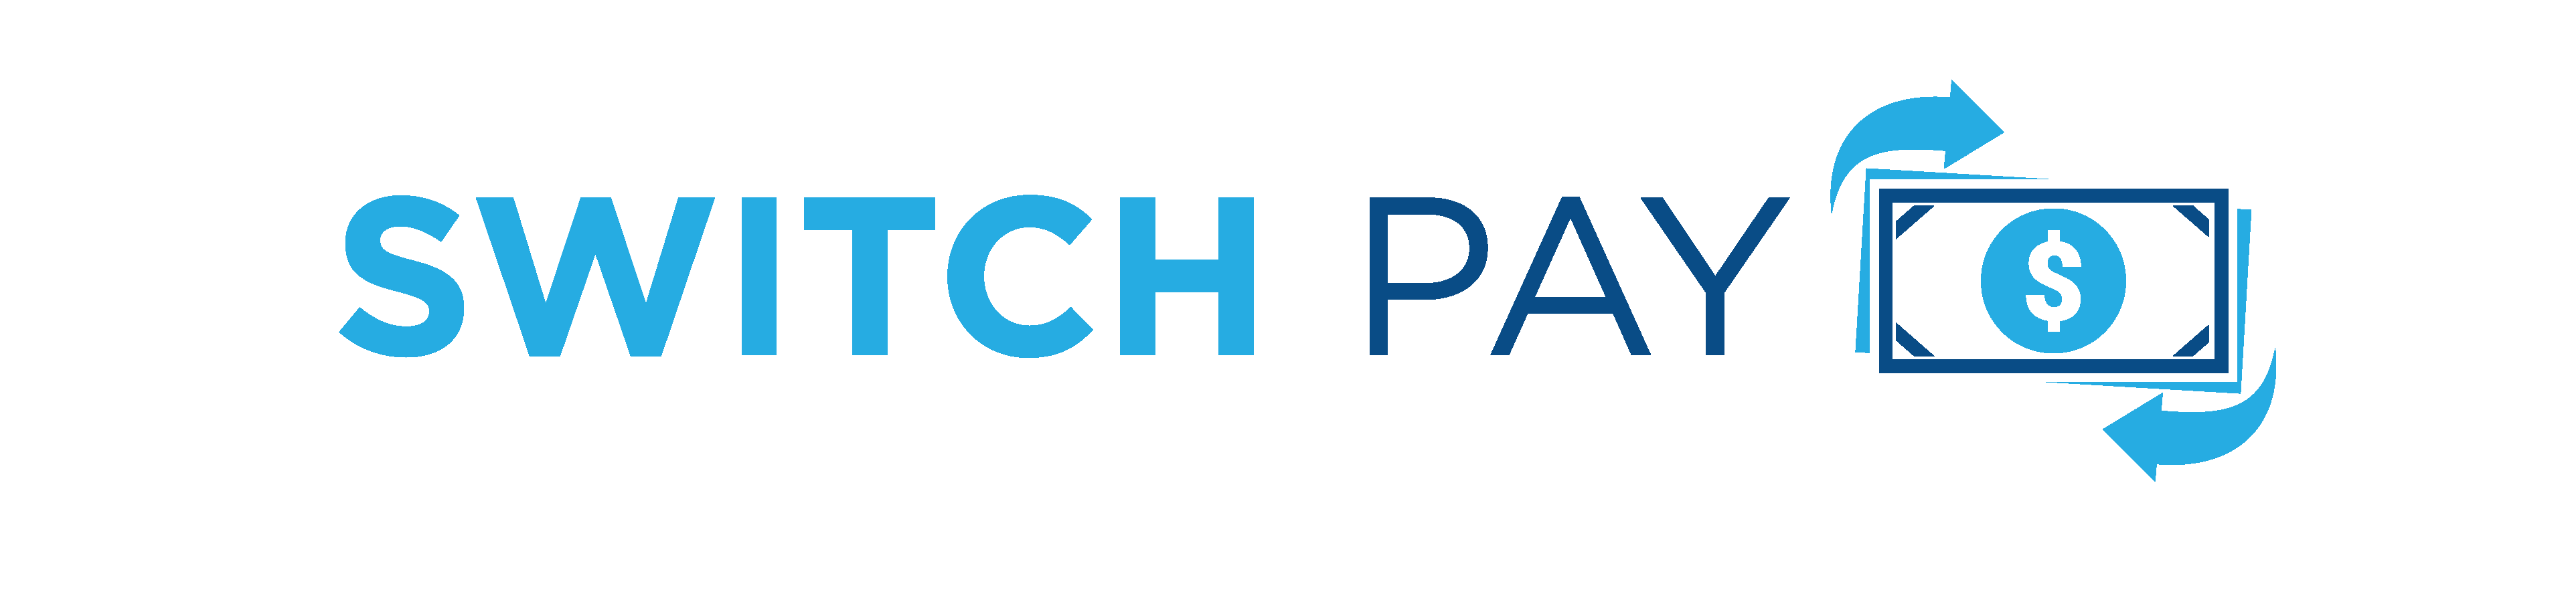 switch pay logo